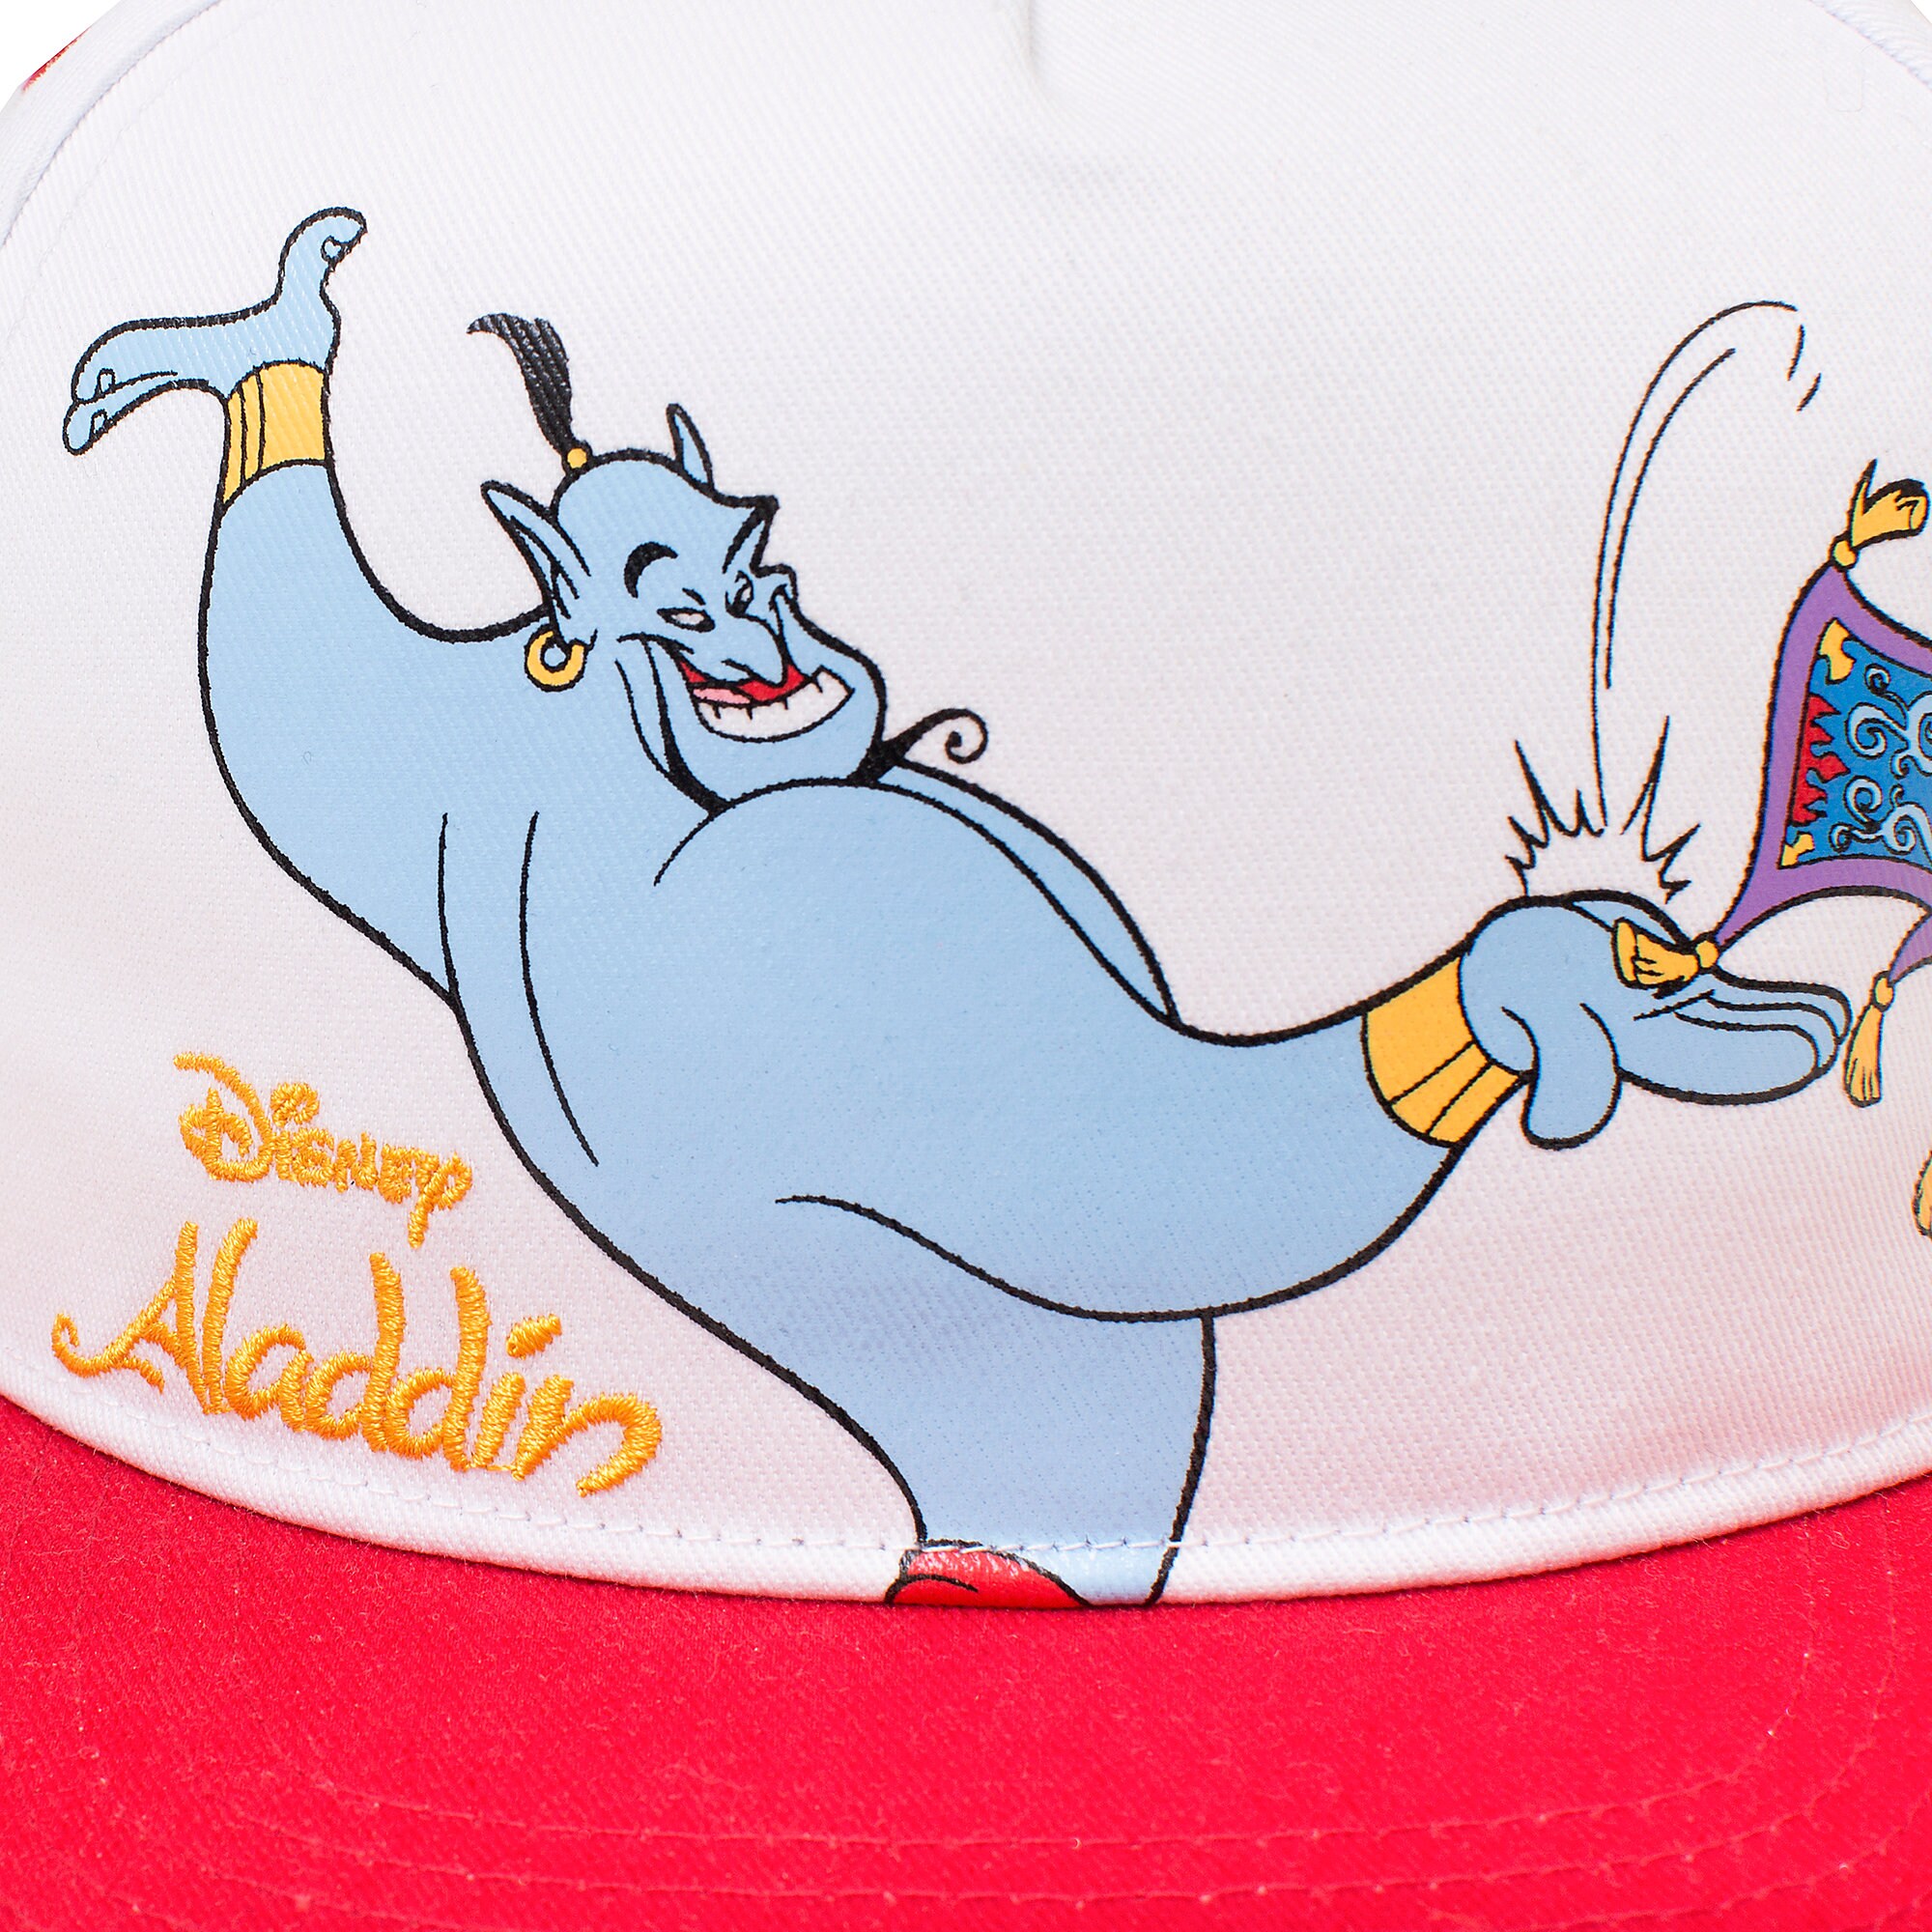 Genie Baseball Cap for Adults by Cakeworthy - Aladdin